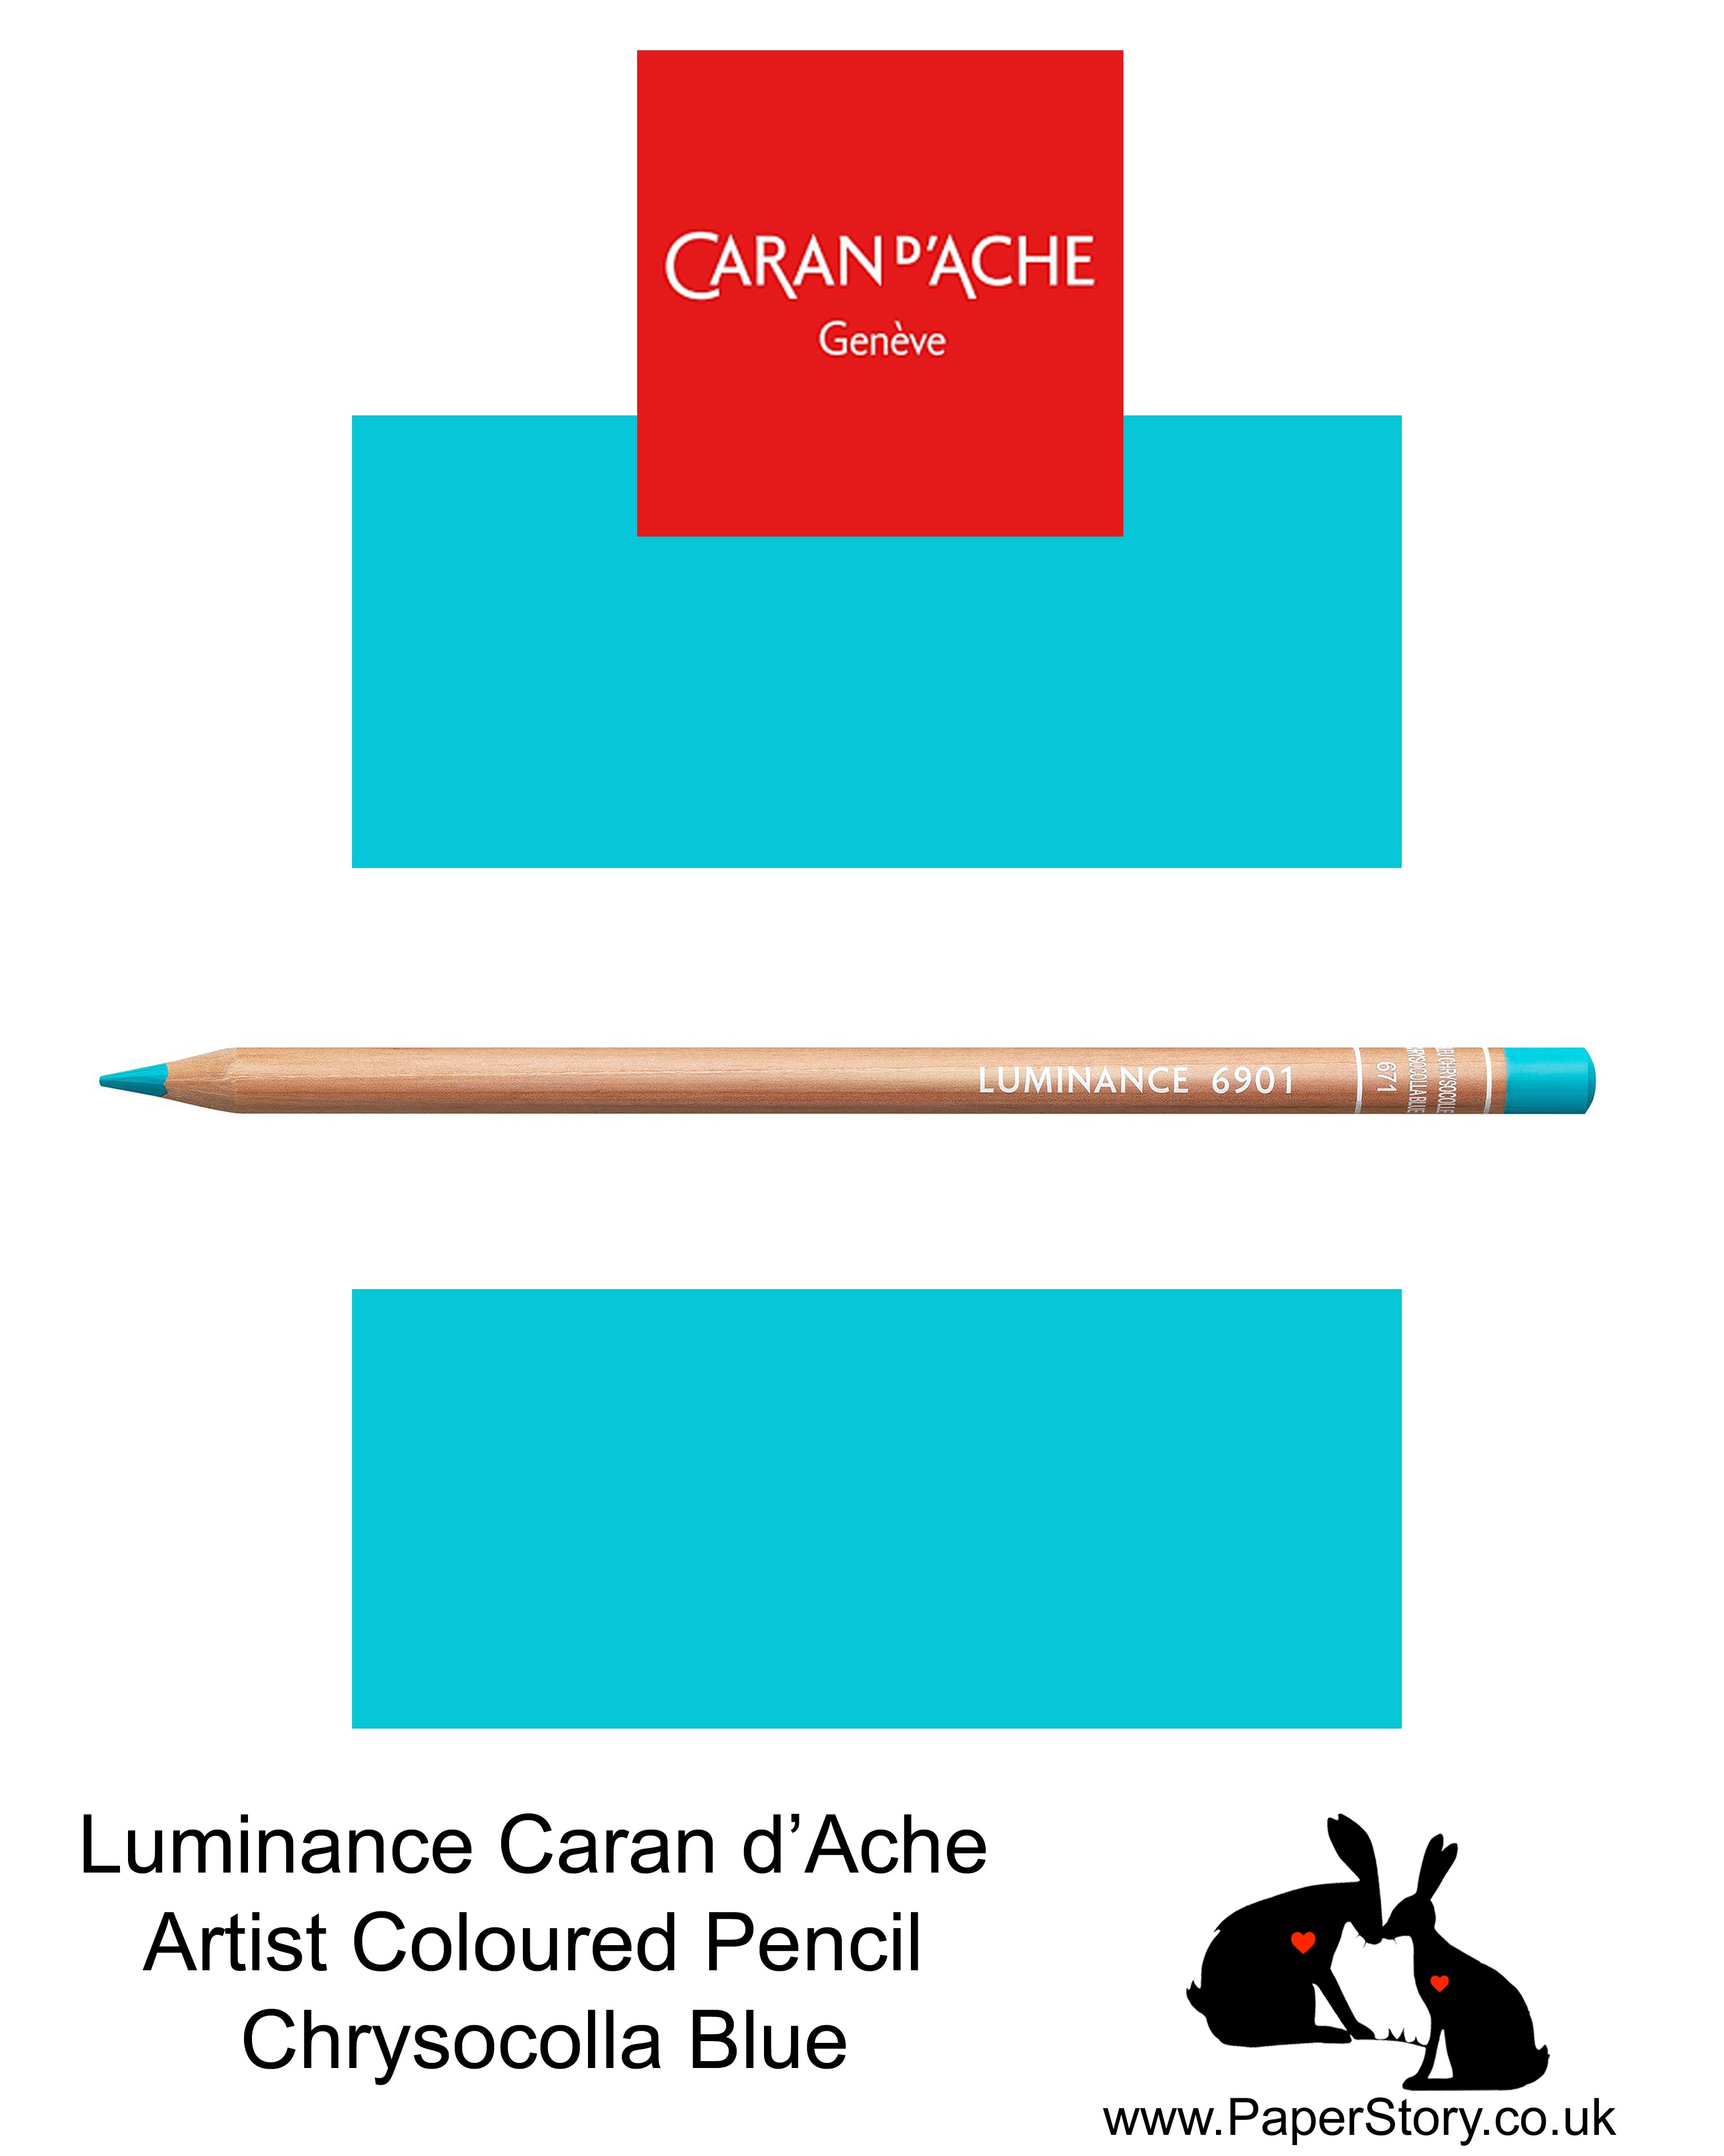 NEW Caran d'Ache Luminance individual Artist Colour Pencils 6901 Chrysocolla Blue 671